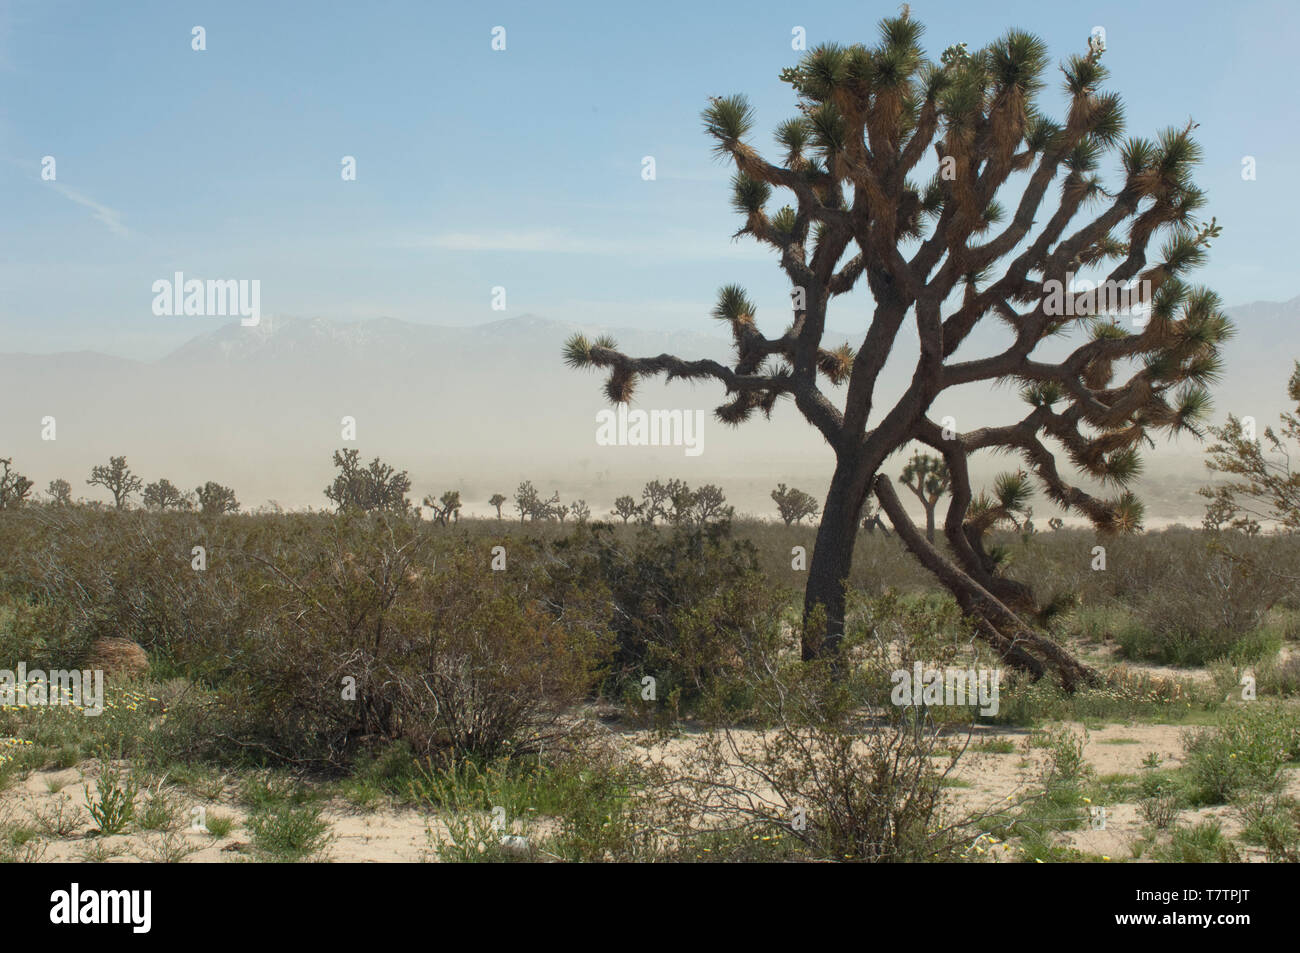 Joshua tree in the Mohave Desert ecosystem of Big Rock Creek Wildlife Sanctuary, California. Digital photograph Stock Photo